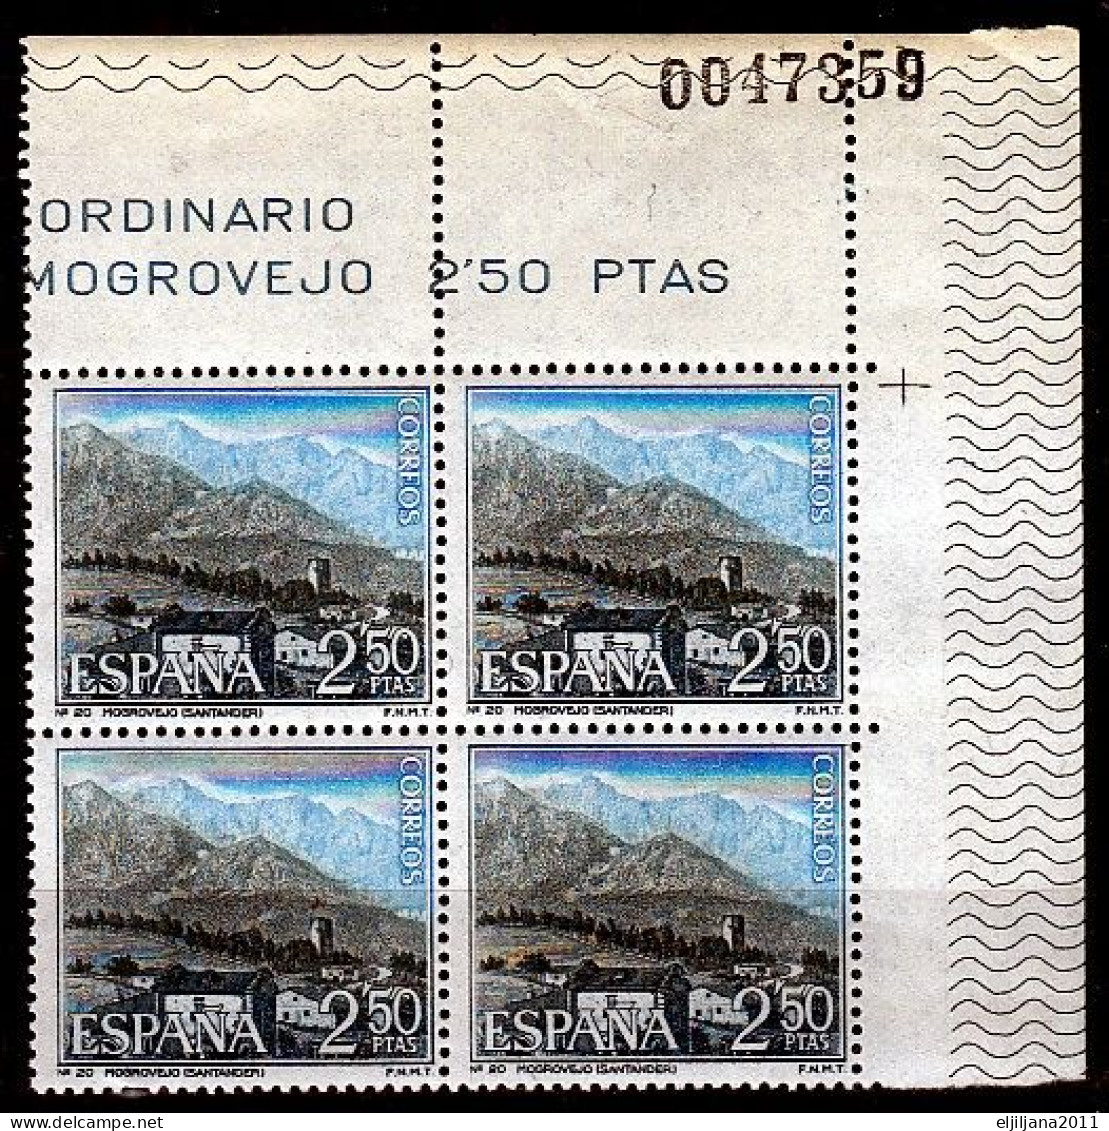 ⁕ SPAIN / ESPANA 1965 ⁕ Mogrovejo - Santander Mi.1589 ⁕ MNH Block Of 4 - Ungebraucht